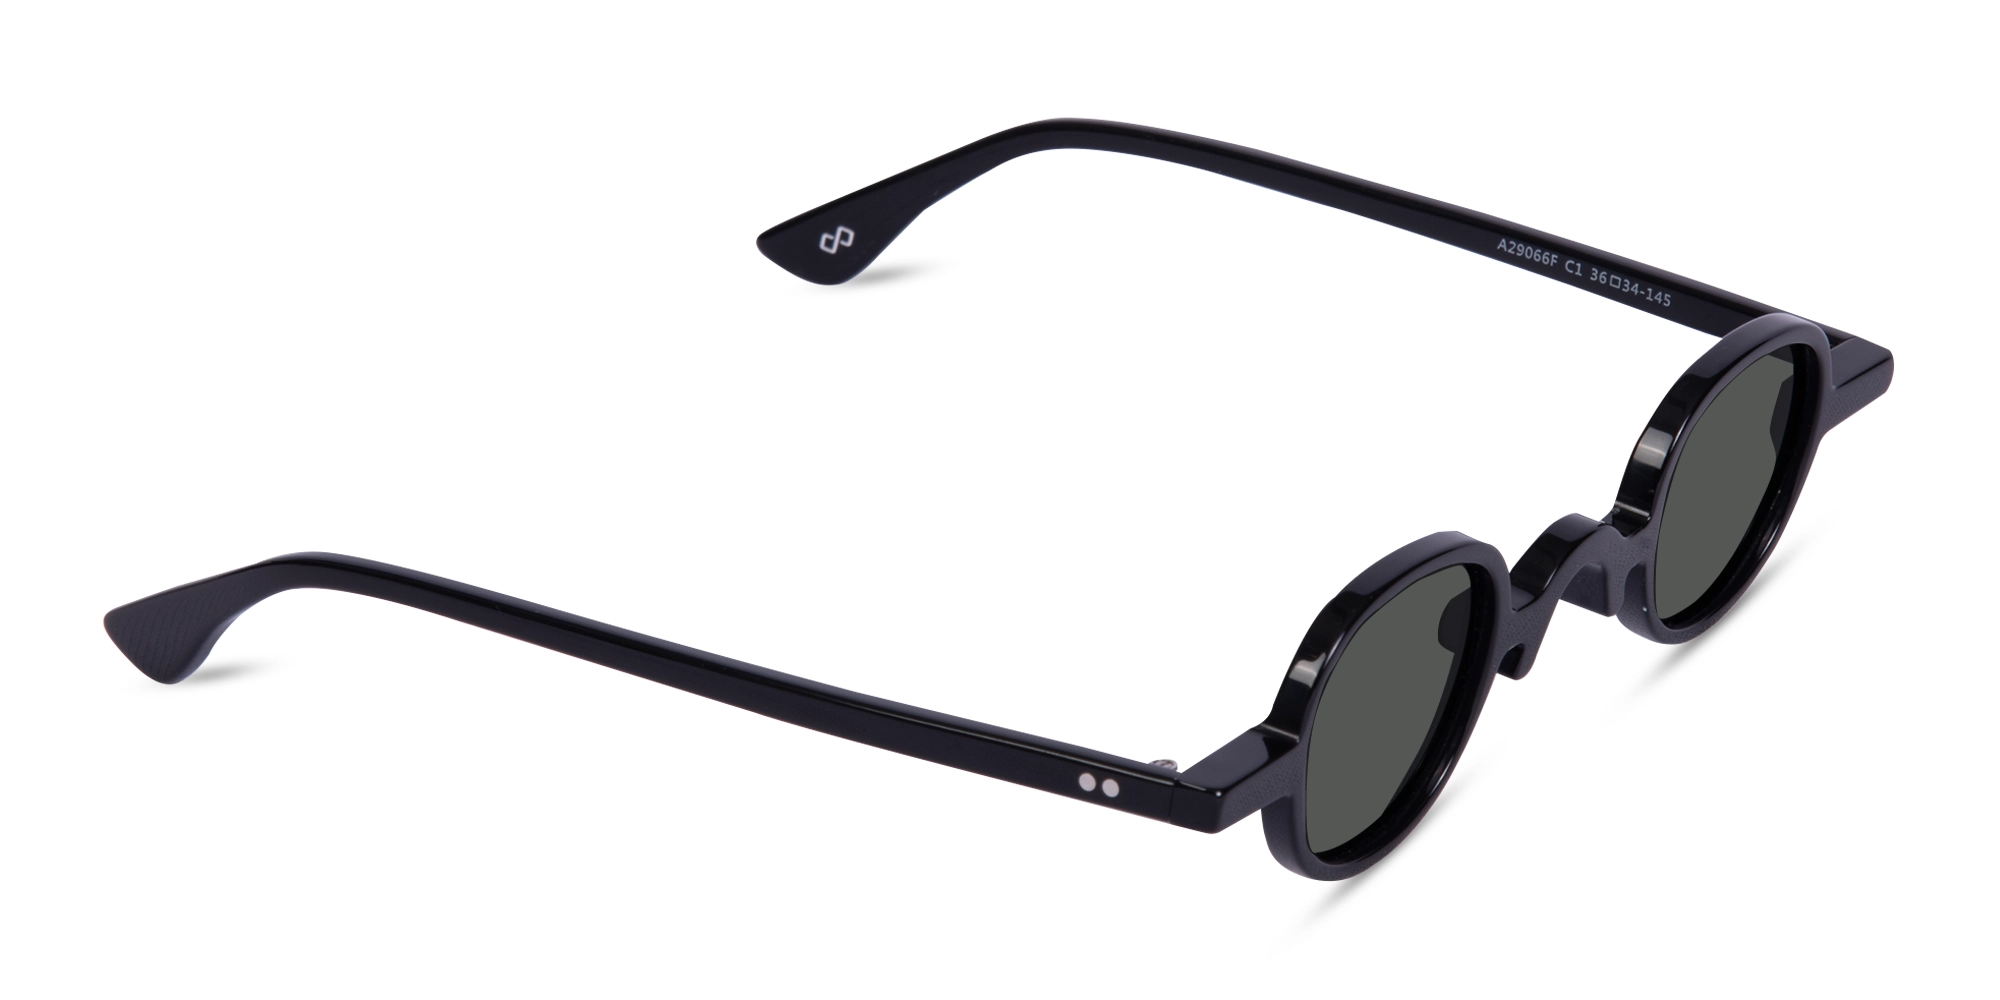 Small Cat Eye Sunglasses Frames-1